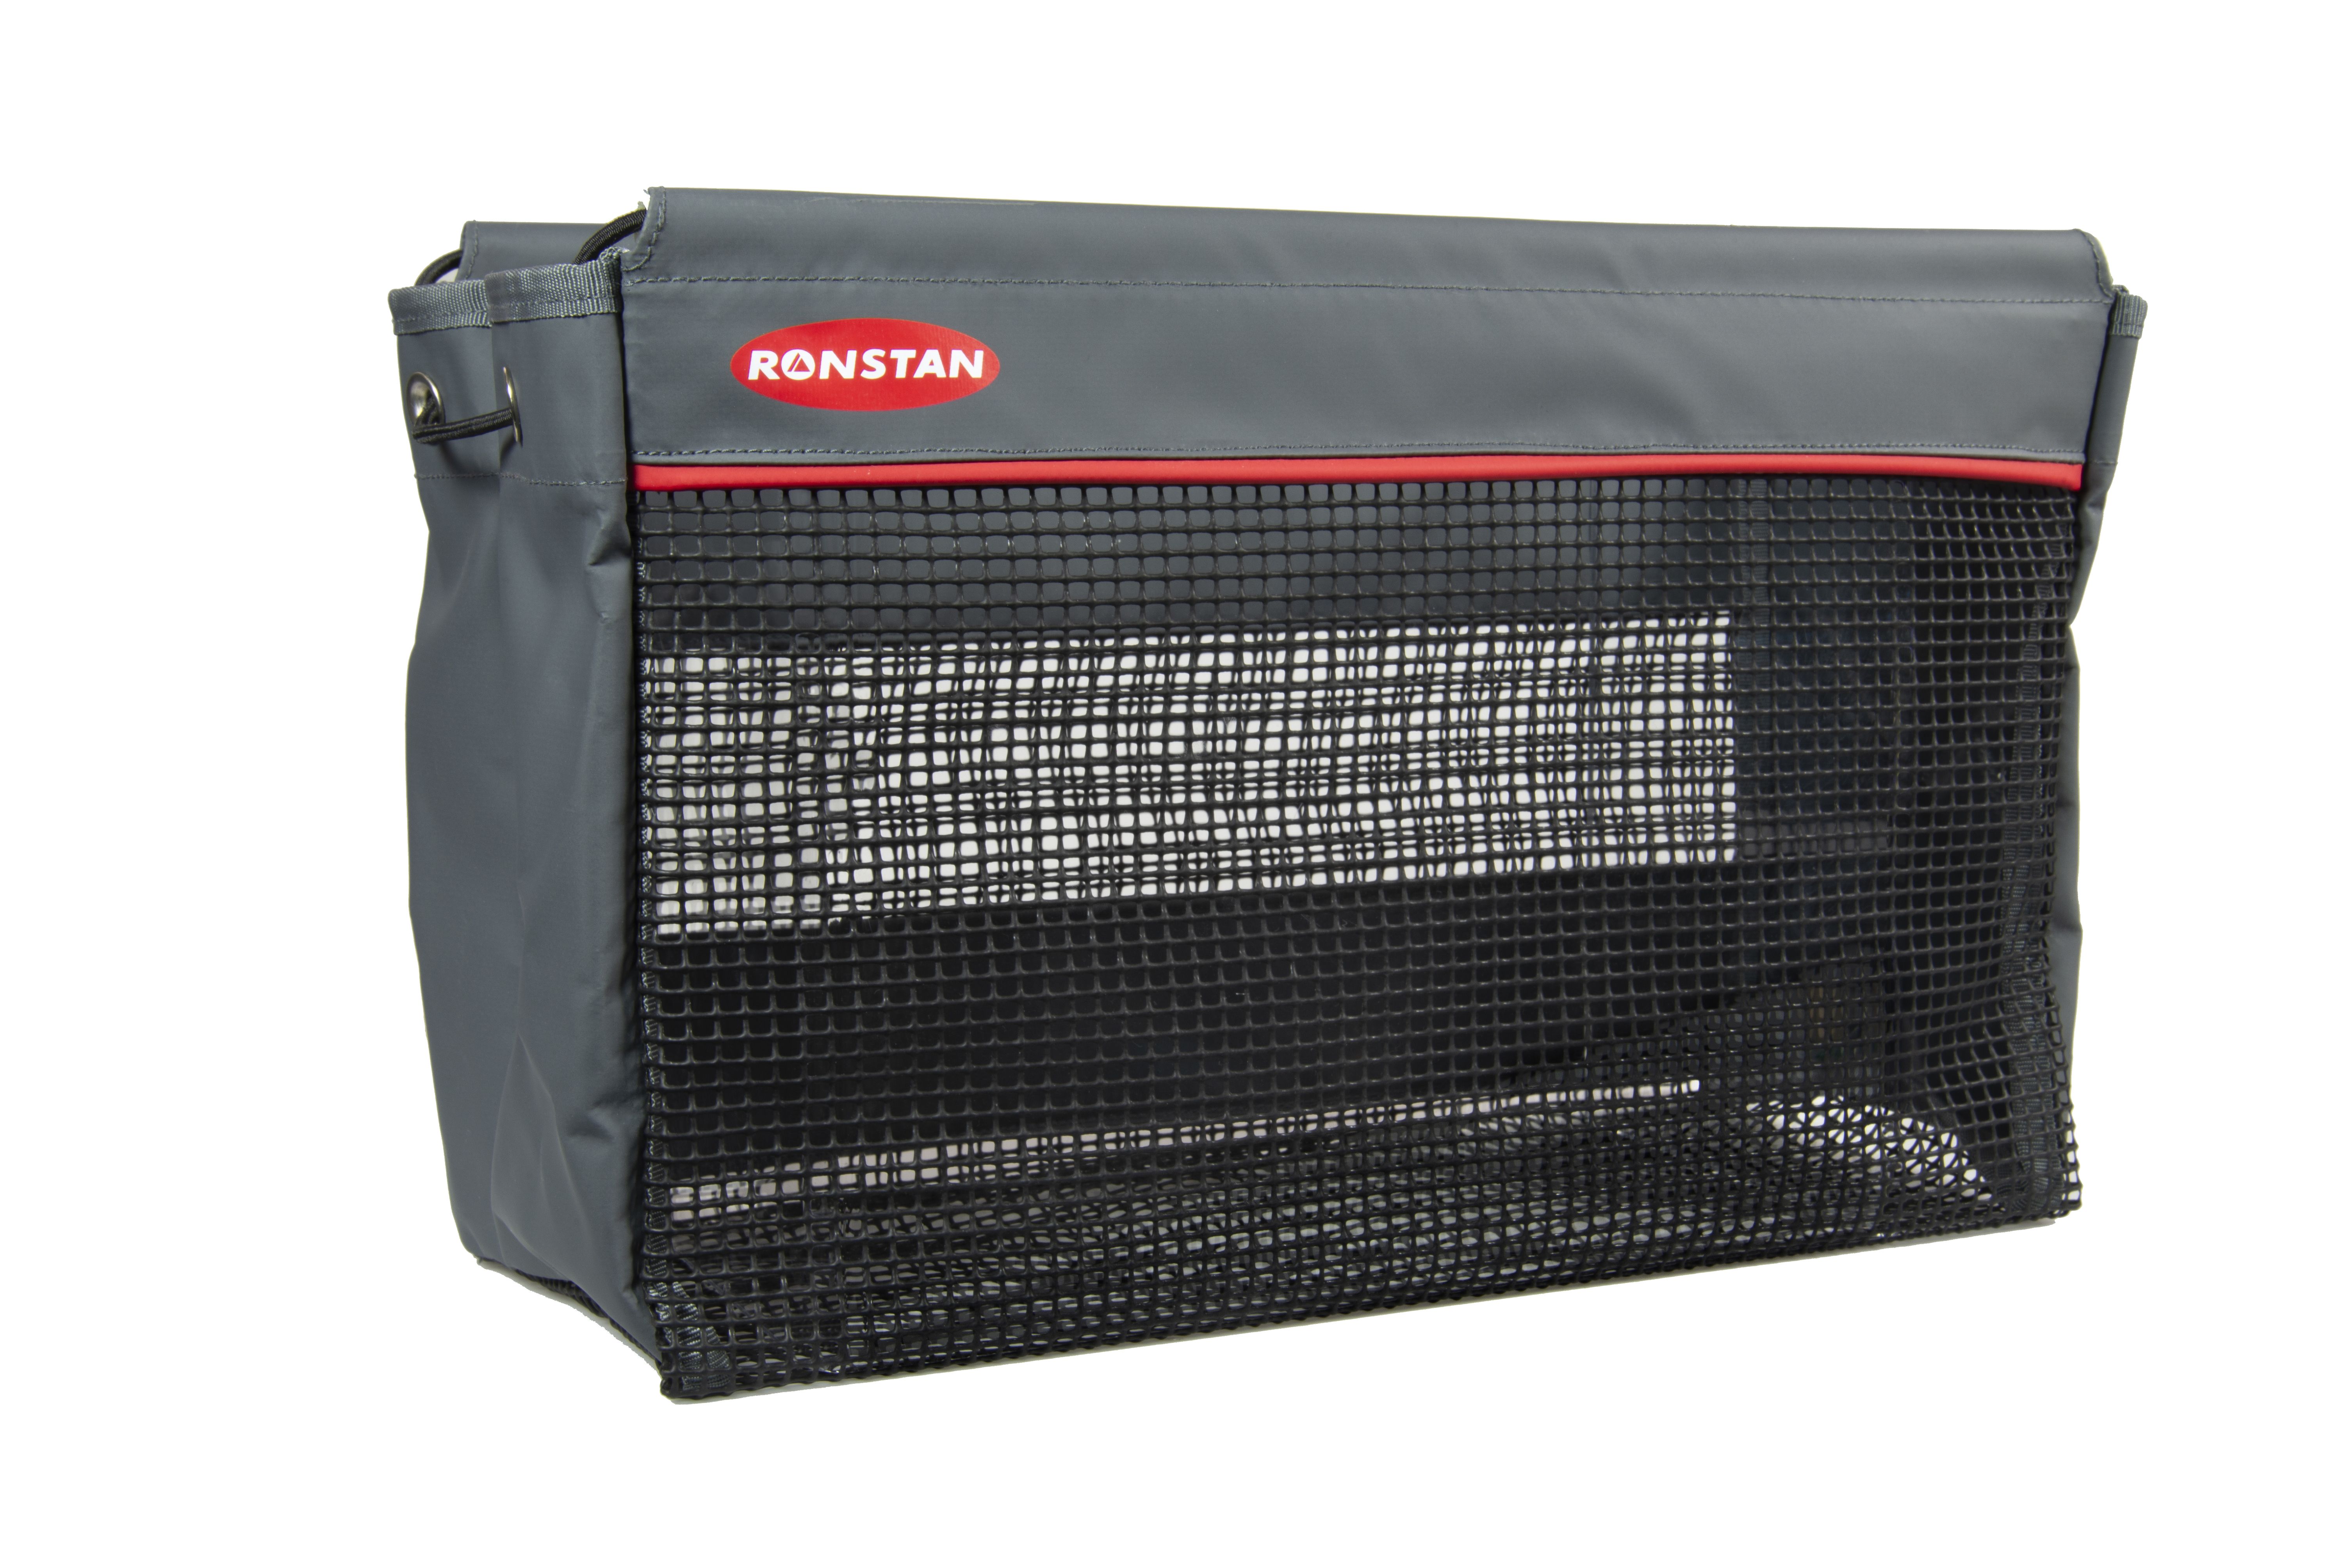 Image 1: Ronstan Rope Bag - Medium - 15.75" x 9.875" x 7.875"